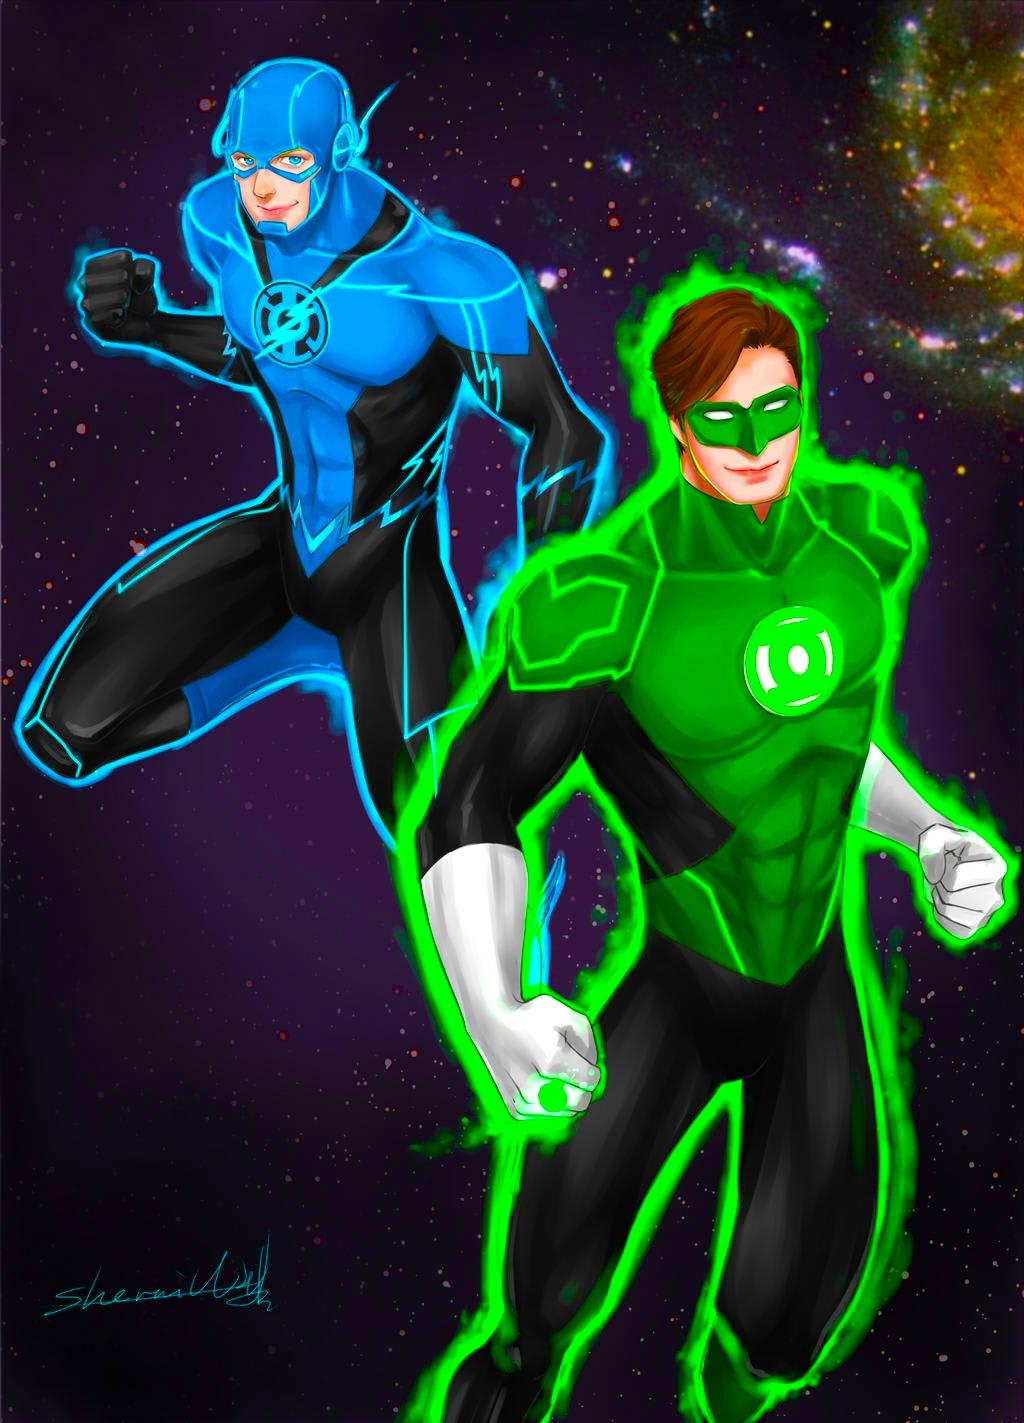 [Artwork] "Blue Lantern Flash and Green Lantern" by sherrill018